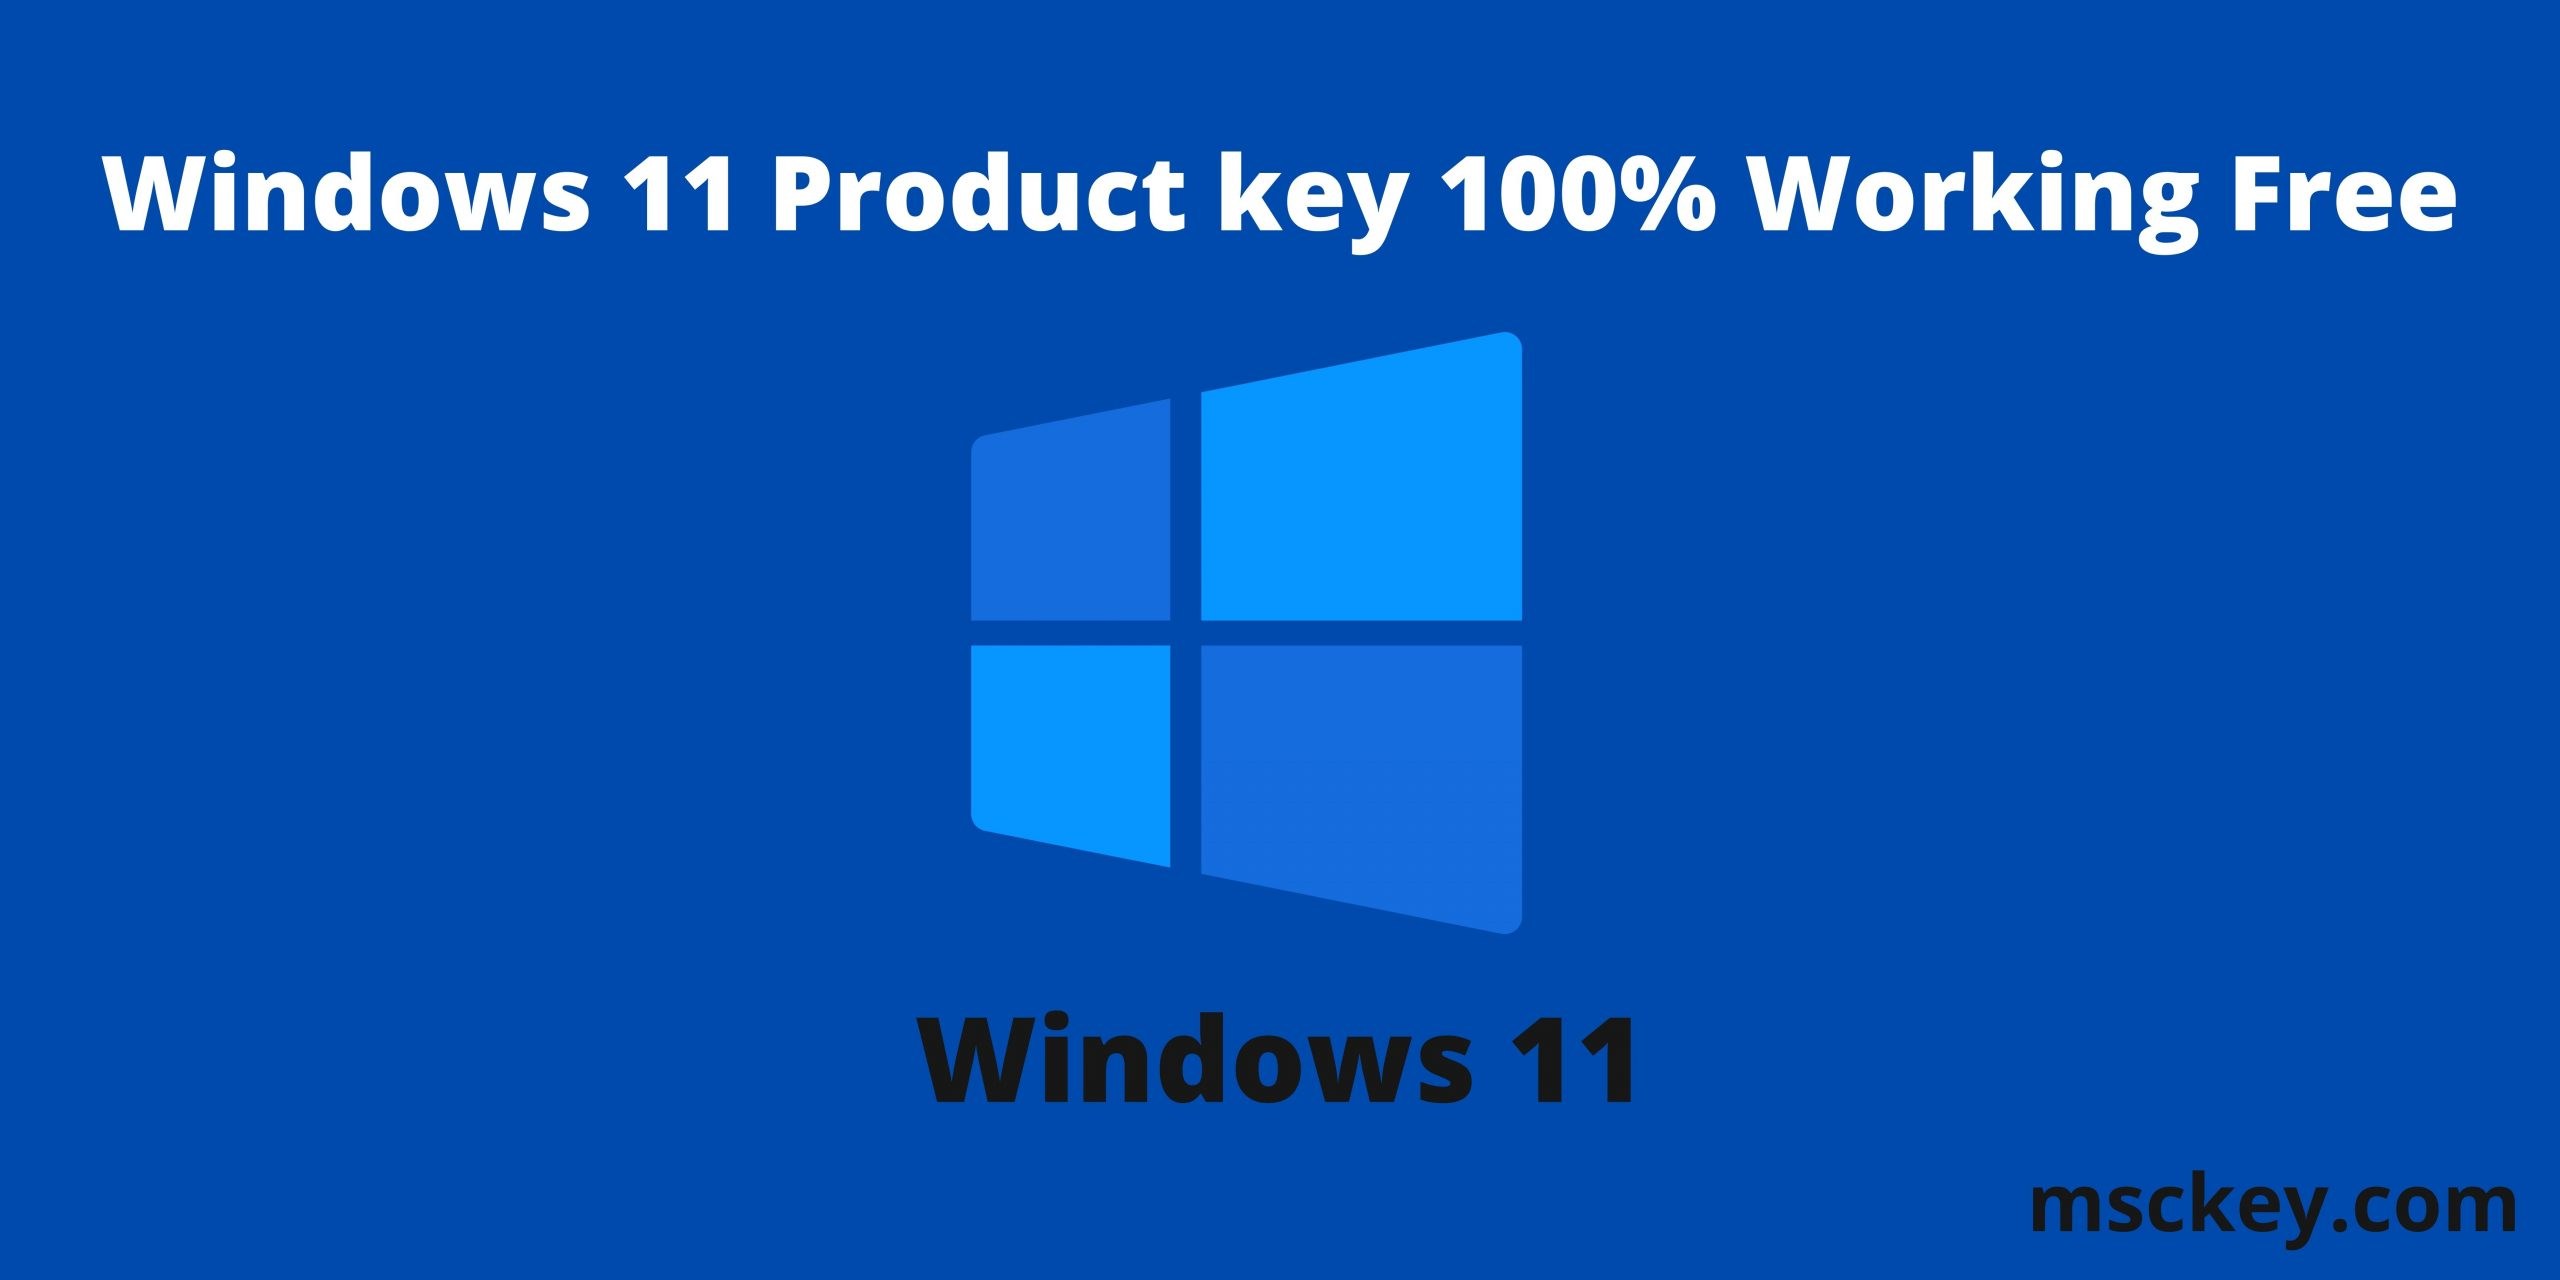 Windows 11 Product key